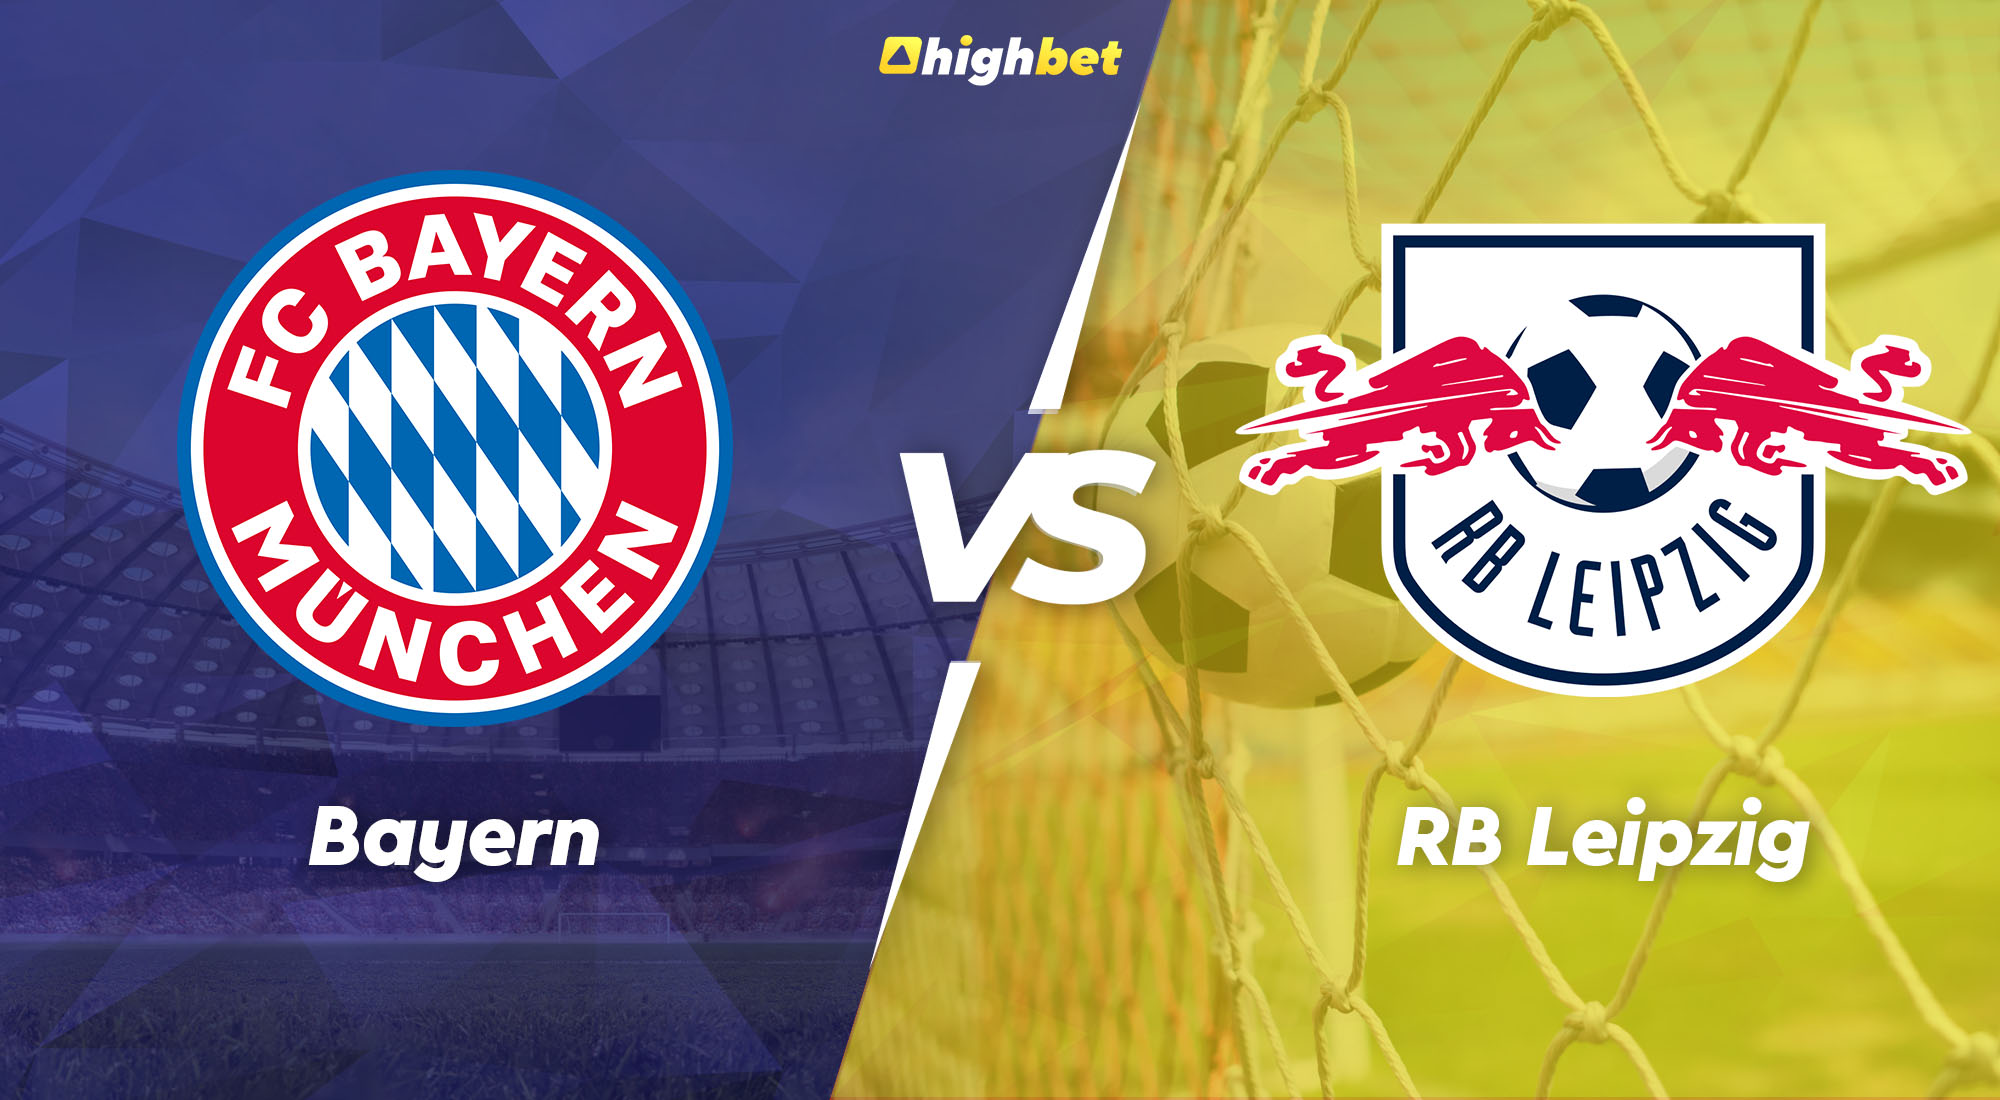 Bayern vs RB Leipzig - highbet Bundesliga Pre-Match Analysis